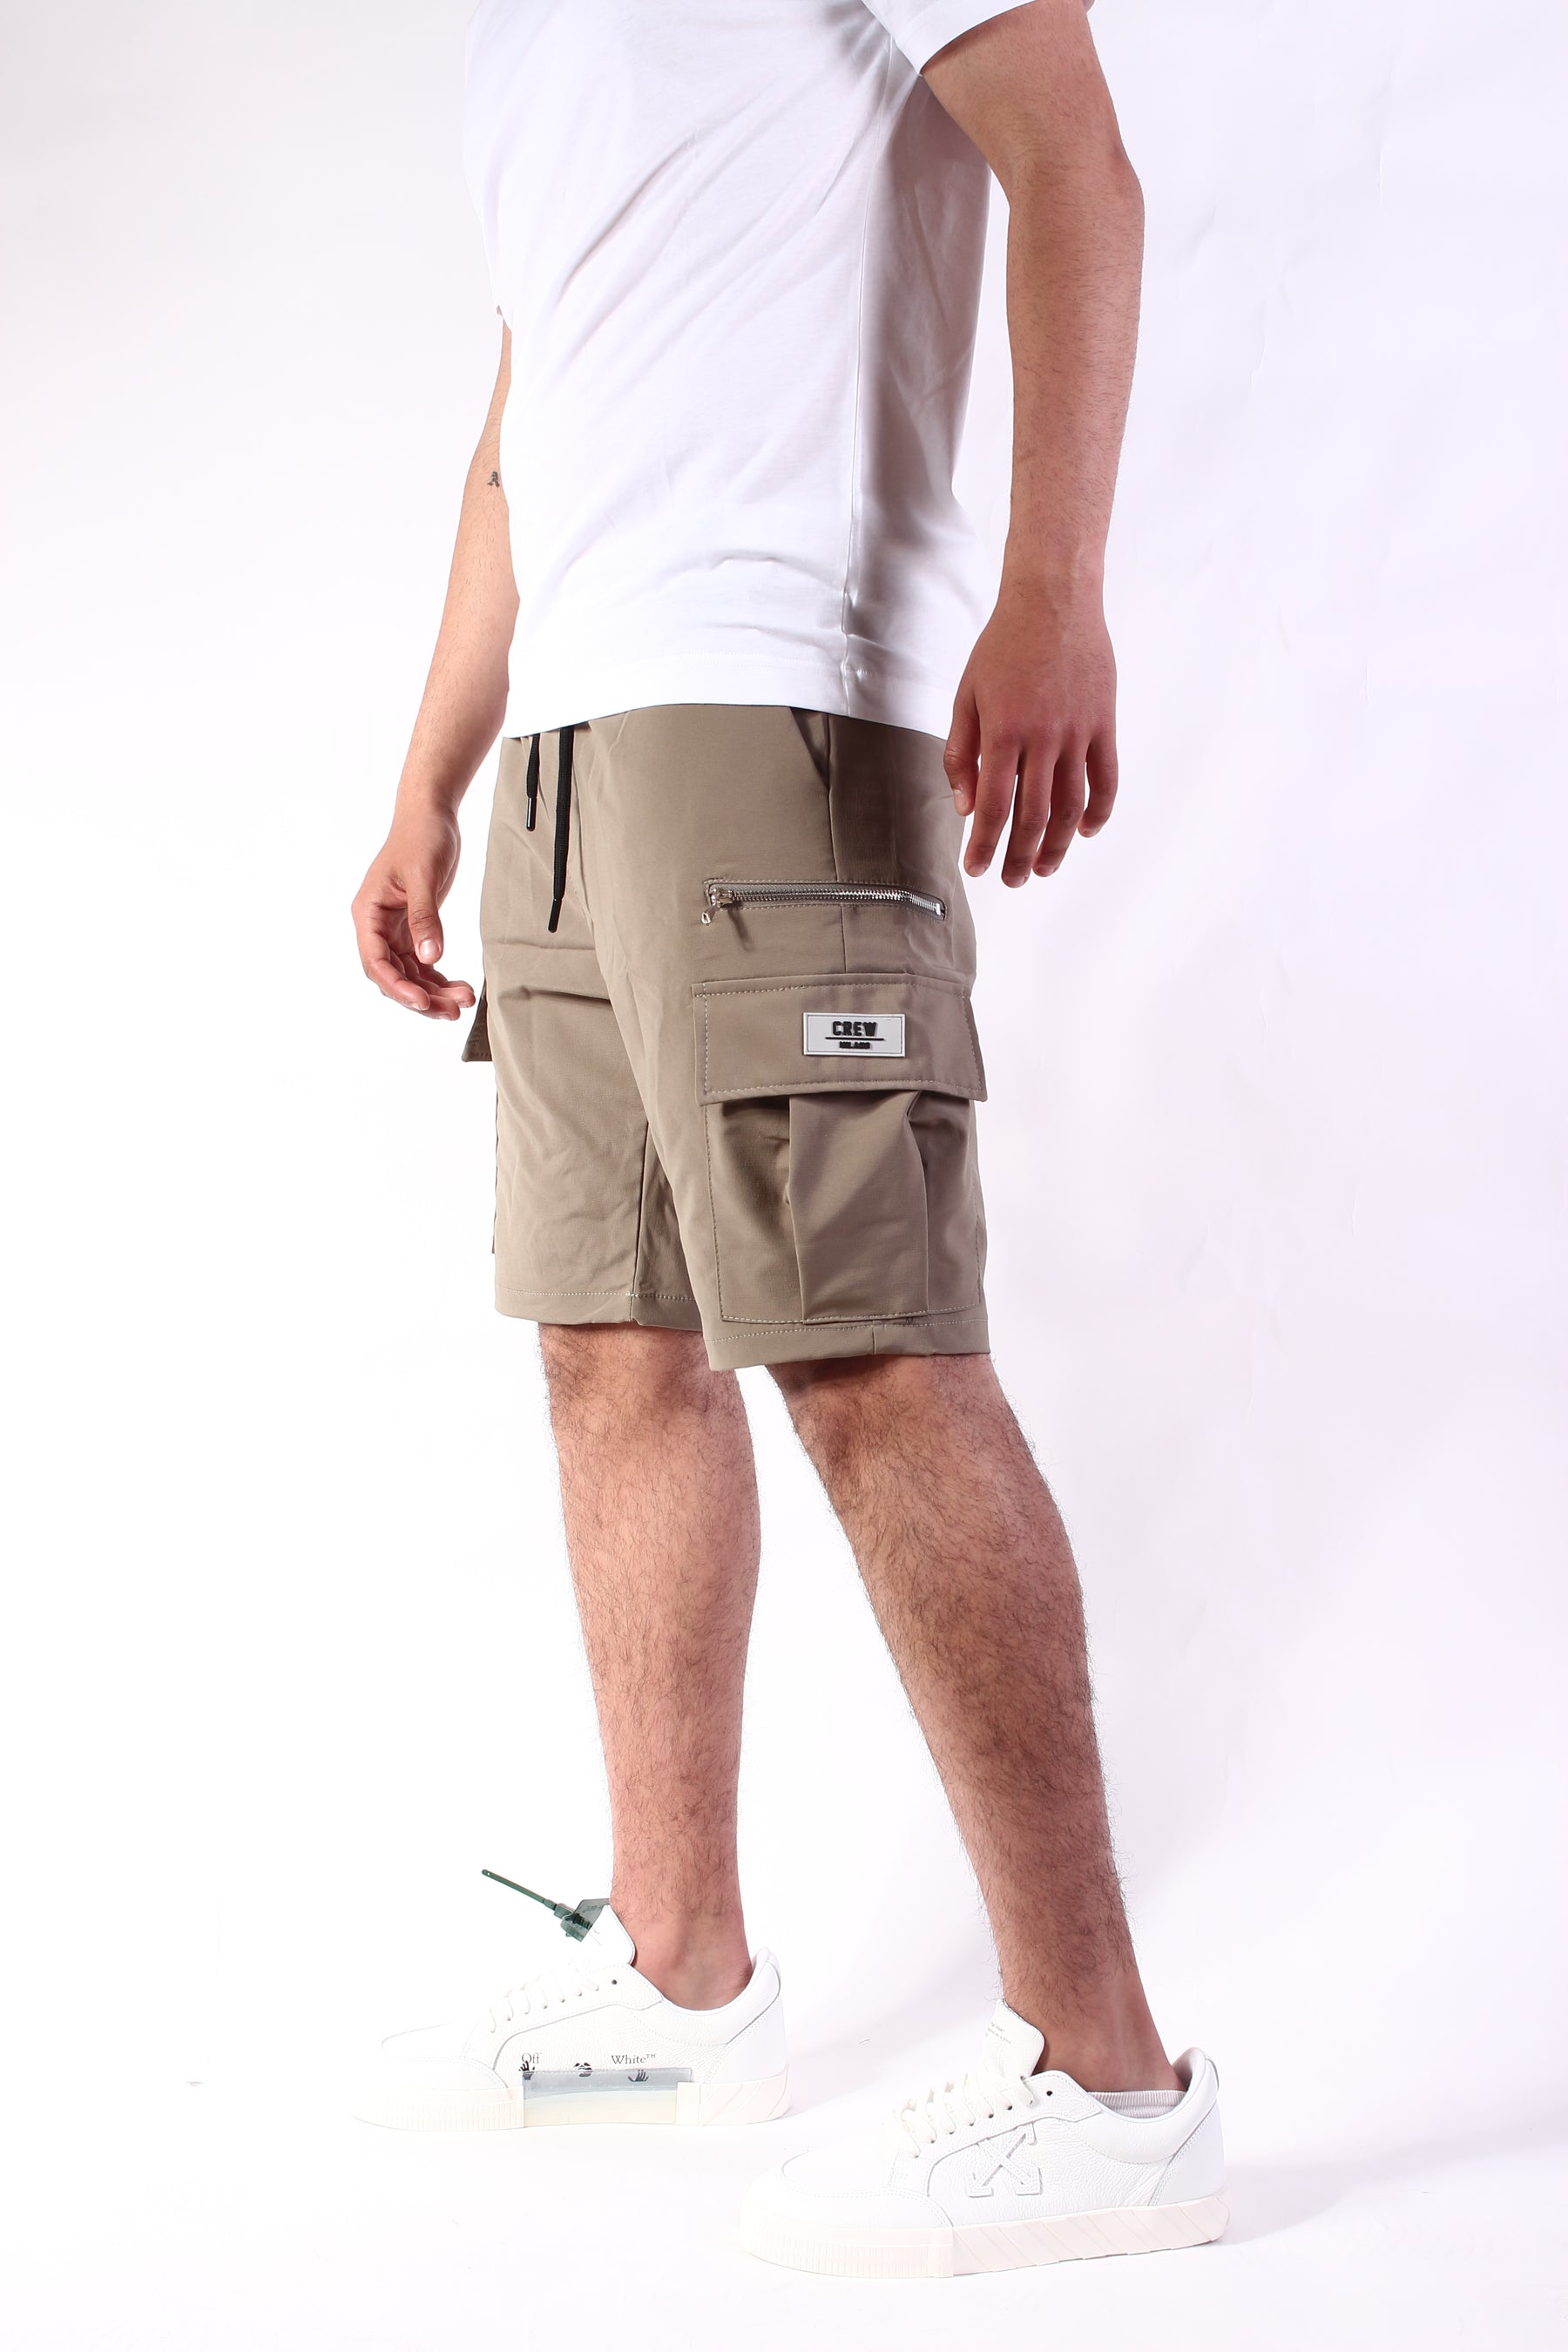 CREW Green Olive Short Cargo Pants Zipper Wide Pocket